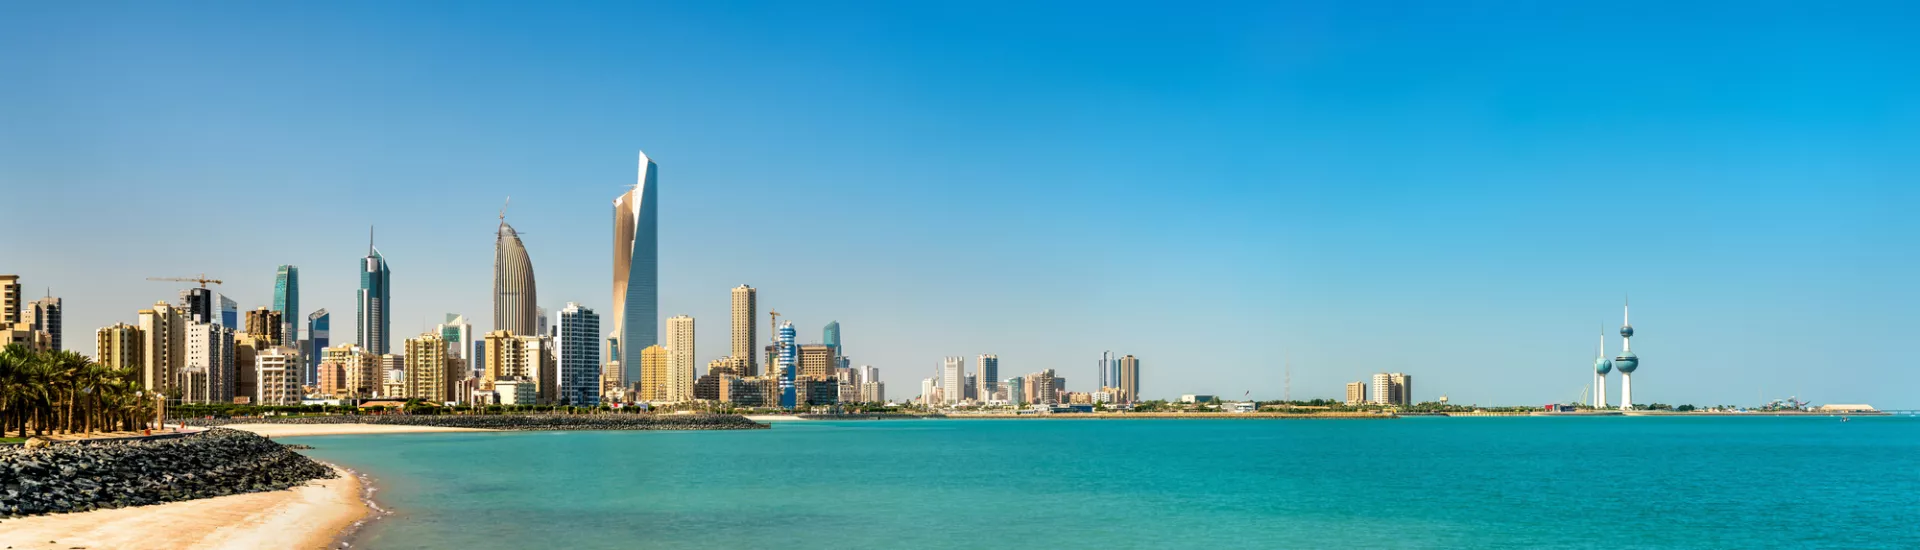 Panorama of Kuwait City in the Persian Gulf